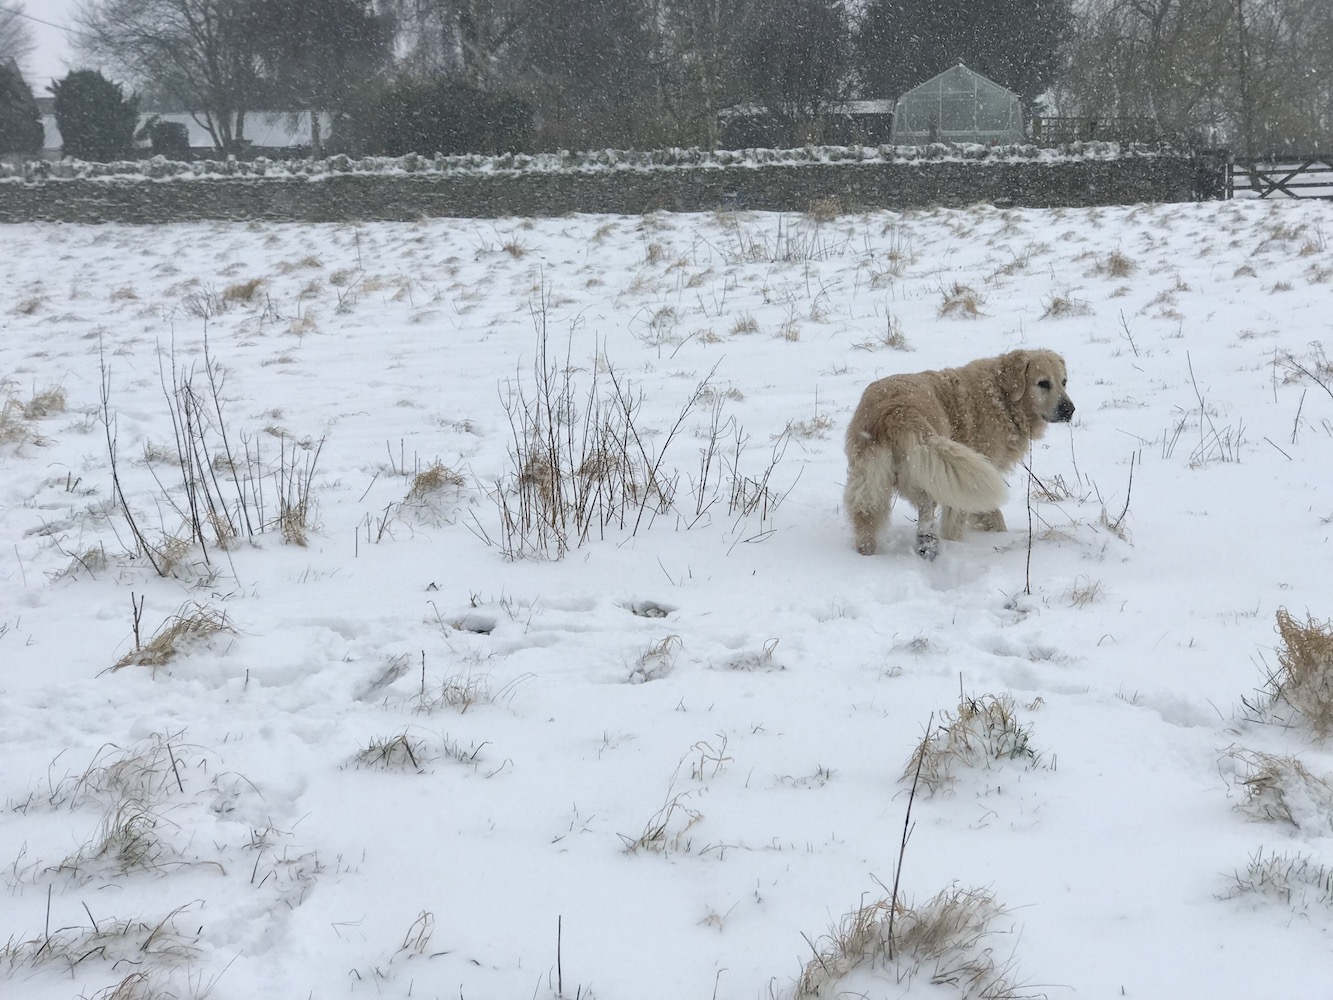 Golden retriever in snow scene cotswold garden